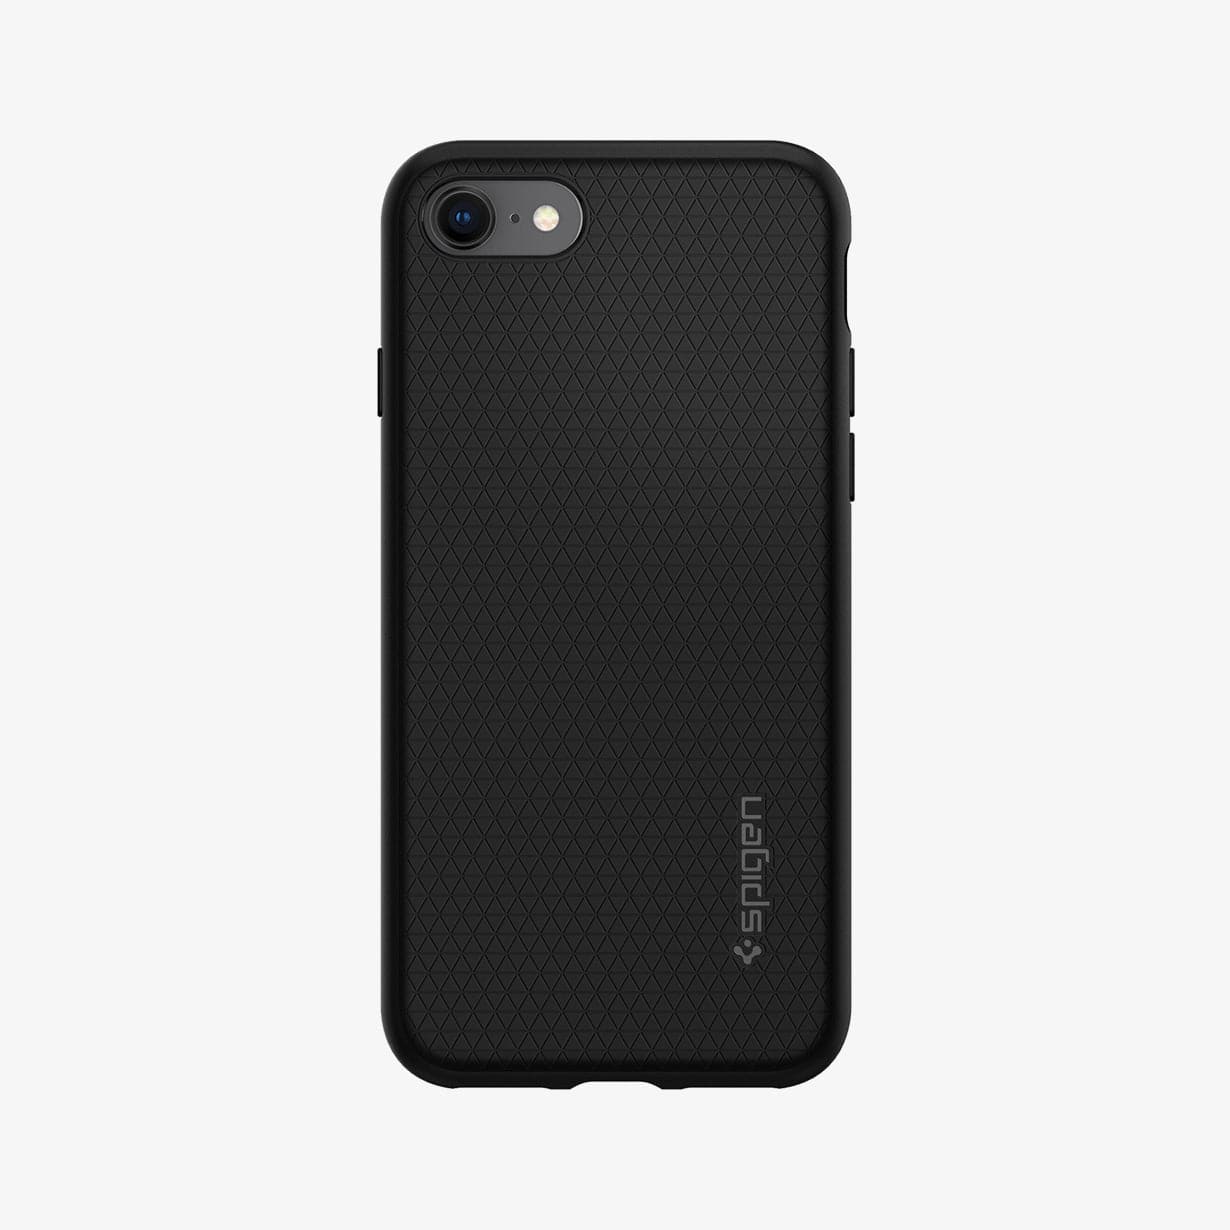 042CS20511 - iPhone 7 Case Liquid Air in black showing the back